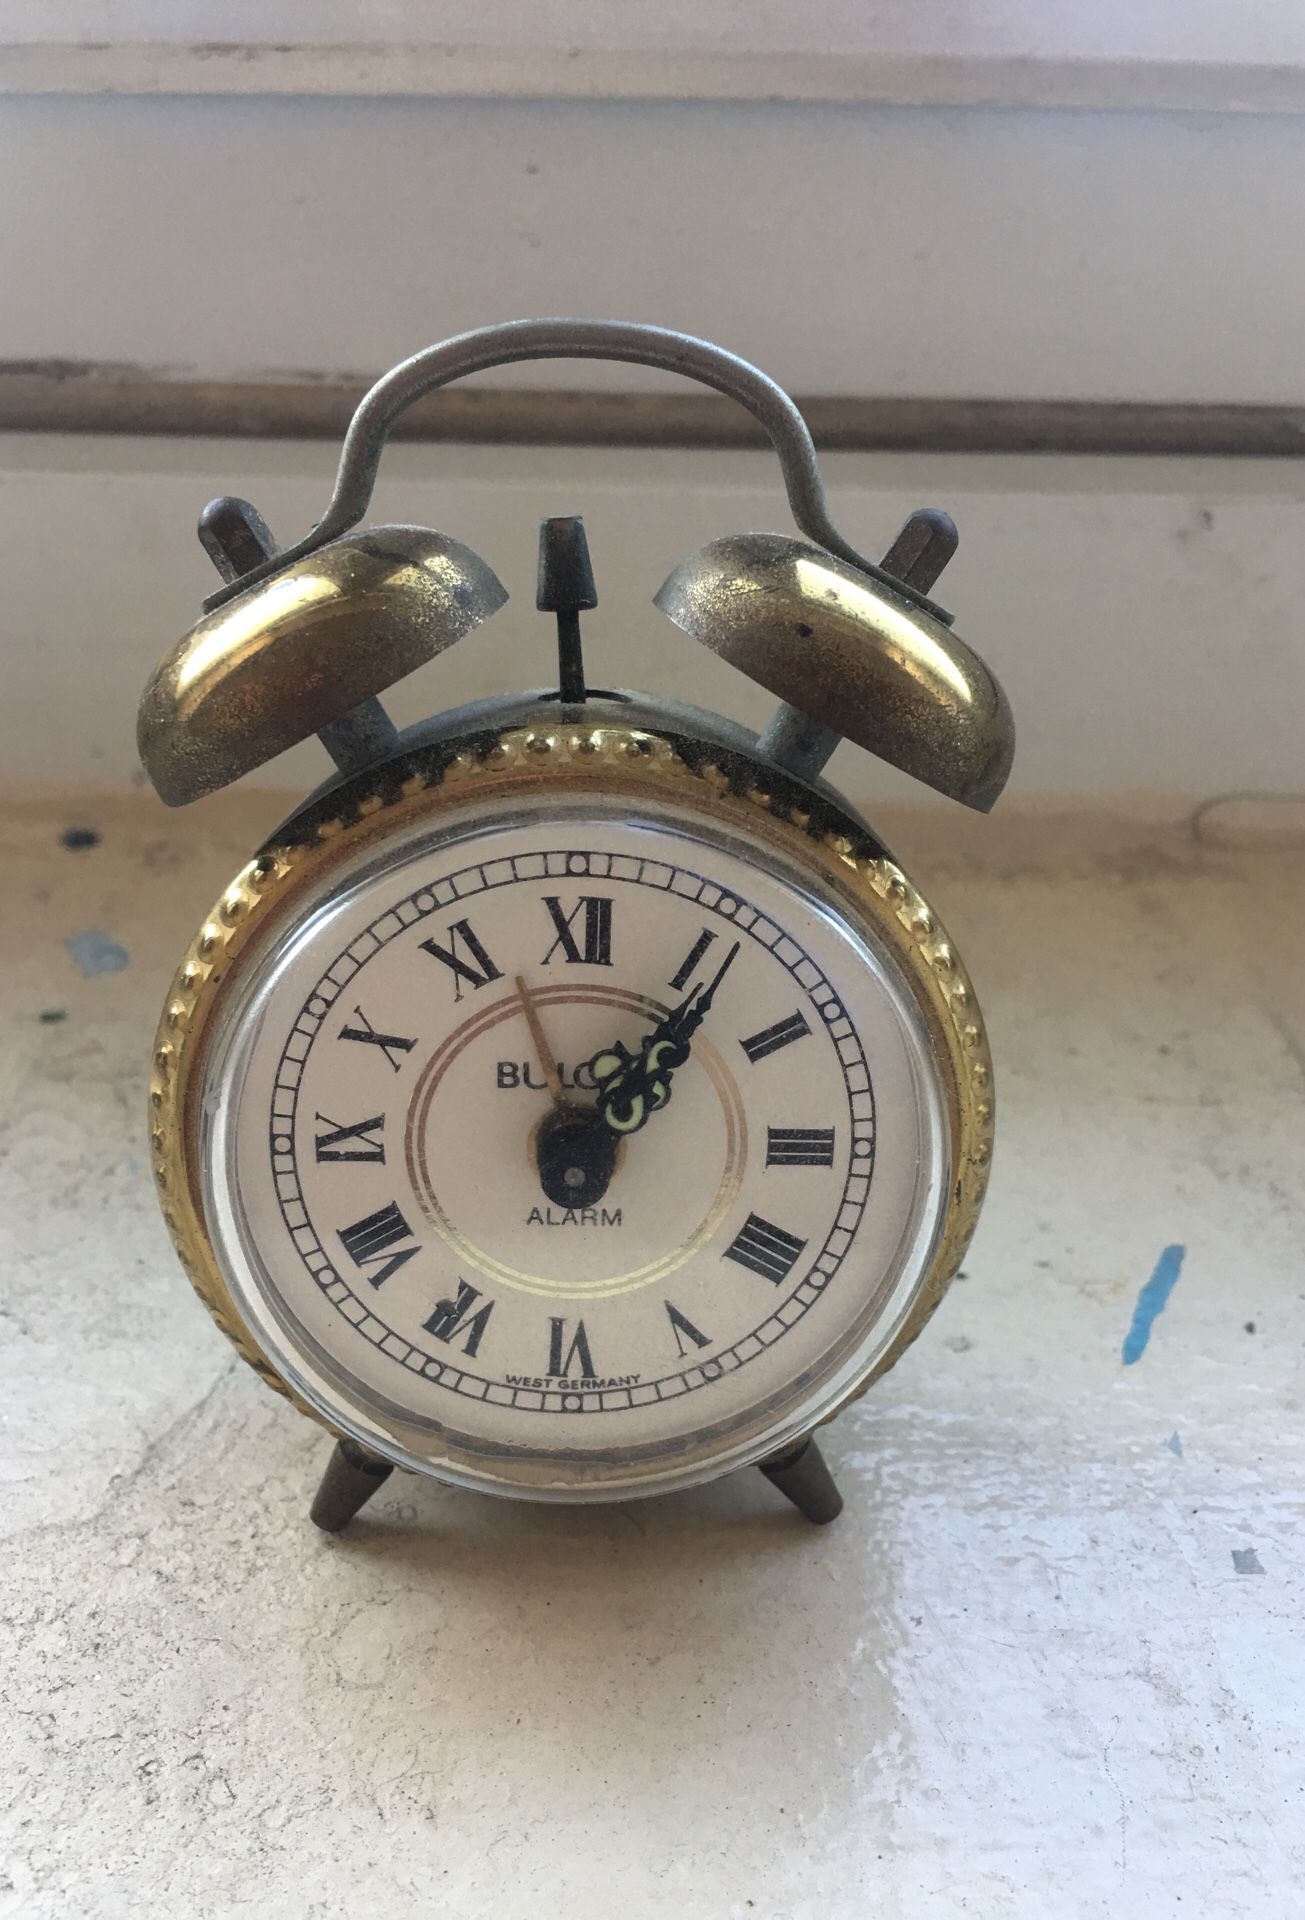 Bulova alarm clock